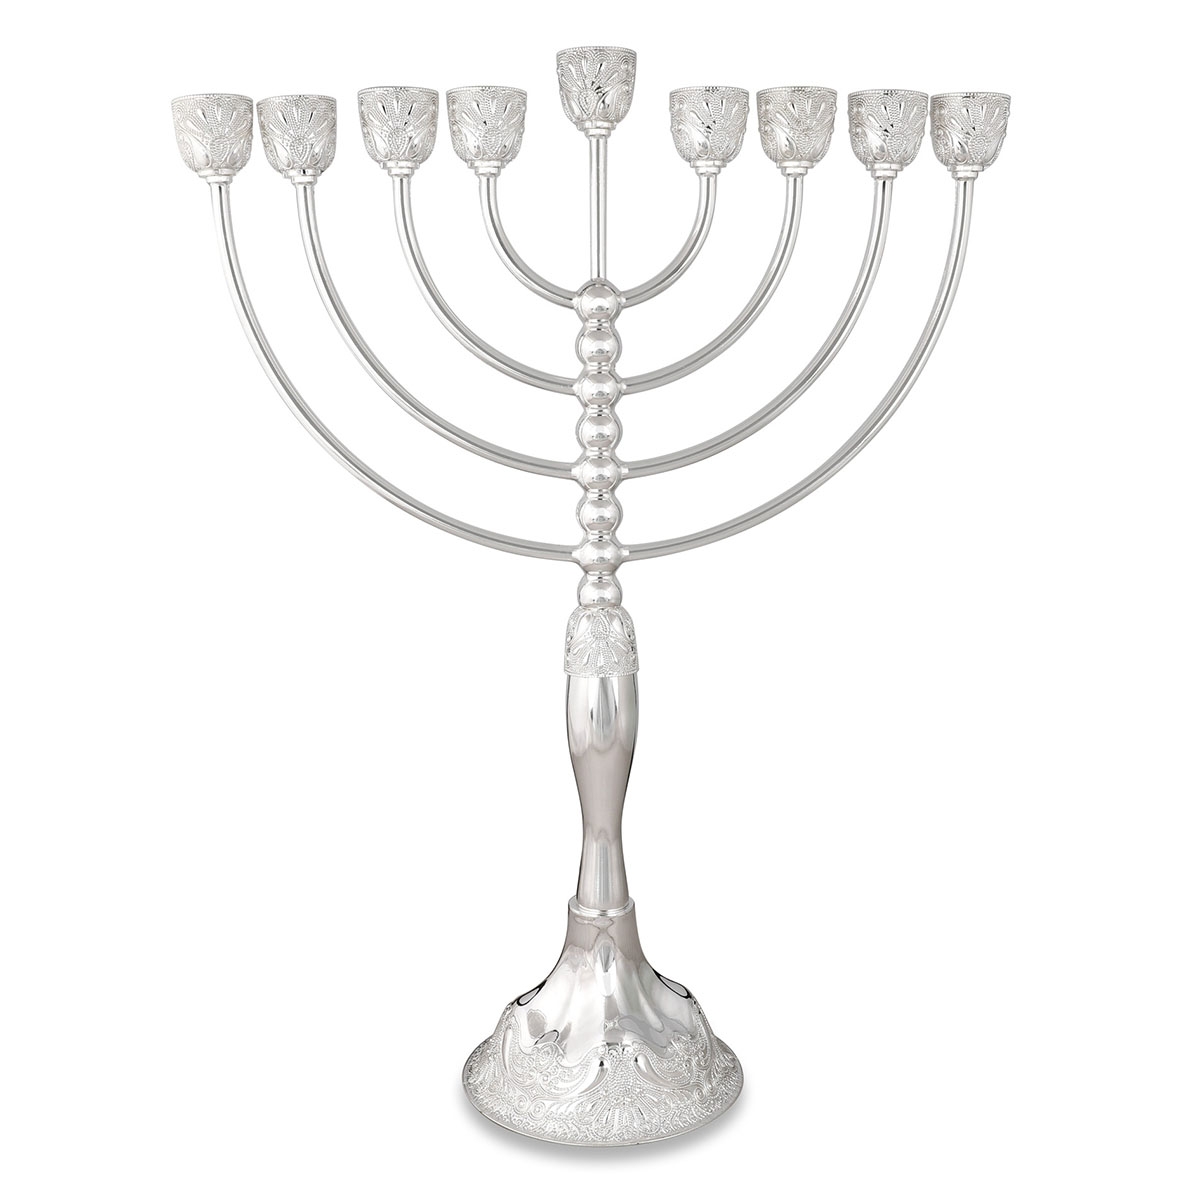 Ornate Silver-Plated Tall Traditional Hanukkah Menorah  - 1